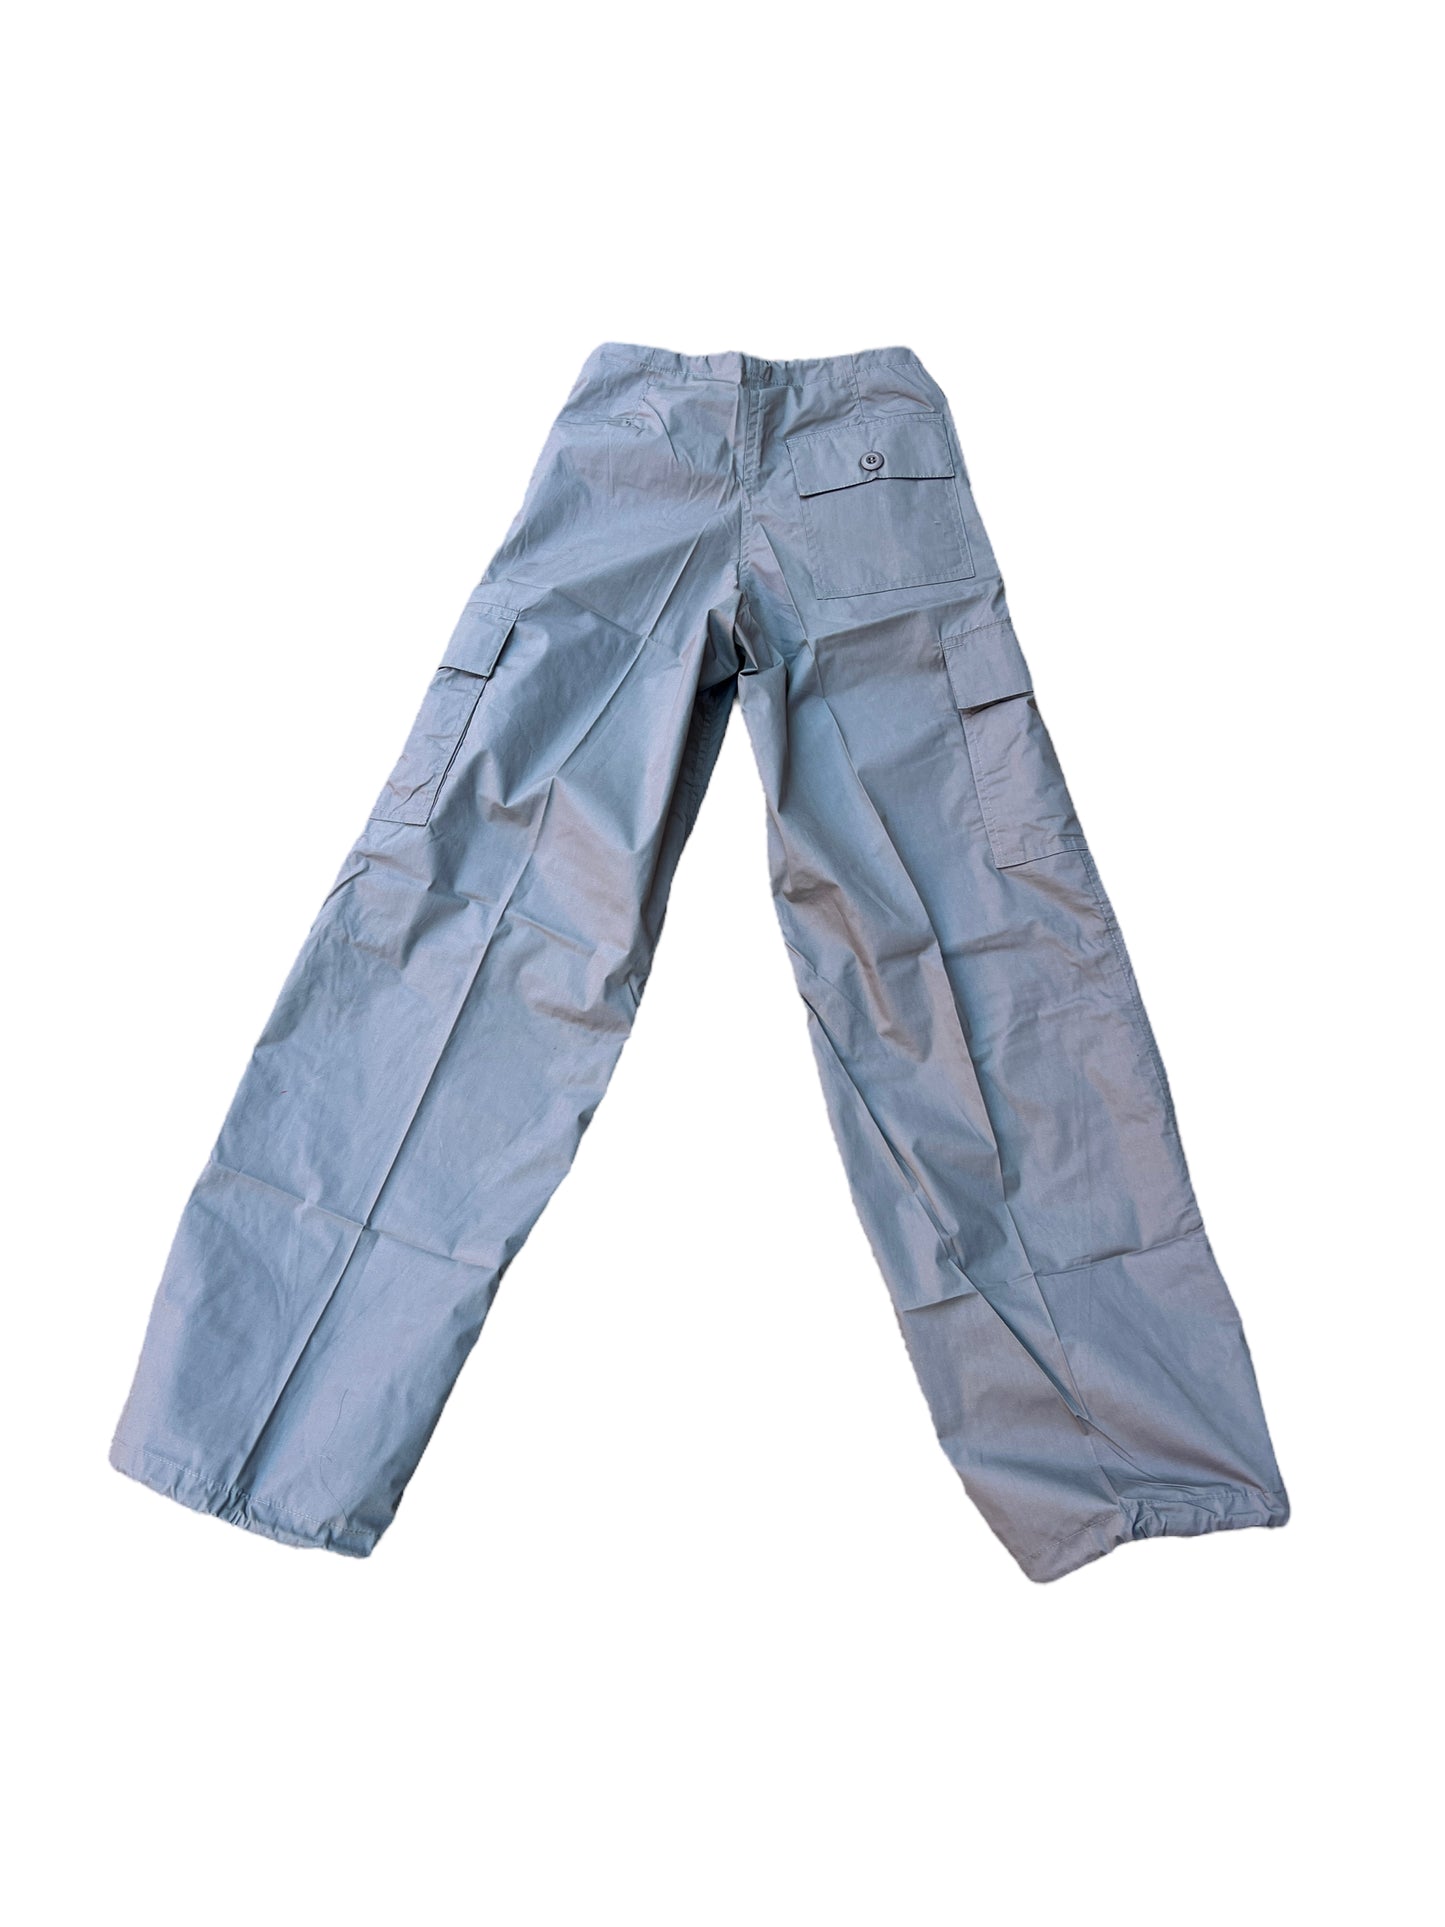 UFO Parachute Pants in Dark Gray 83840